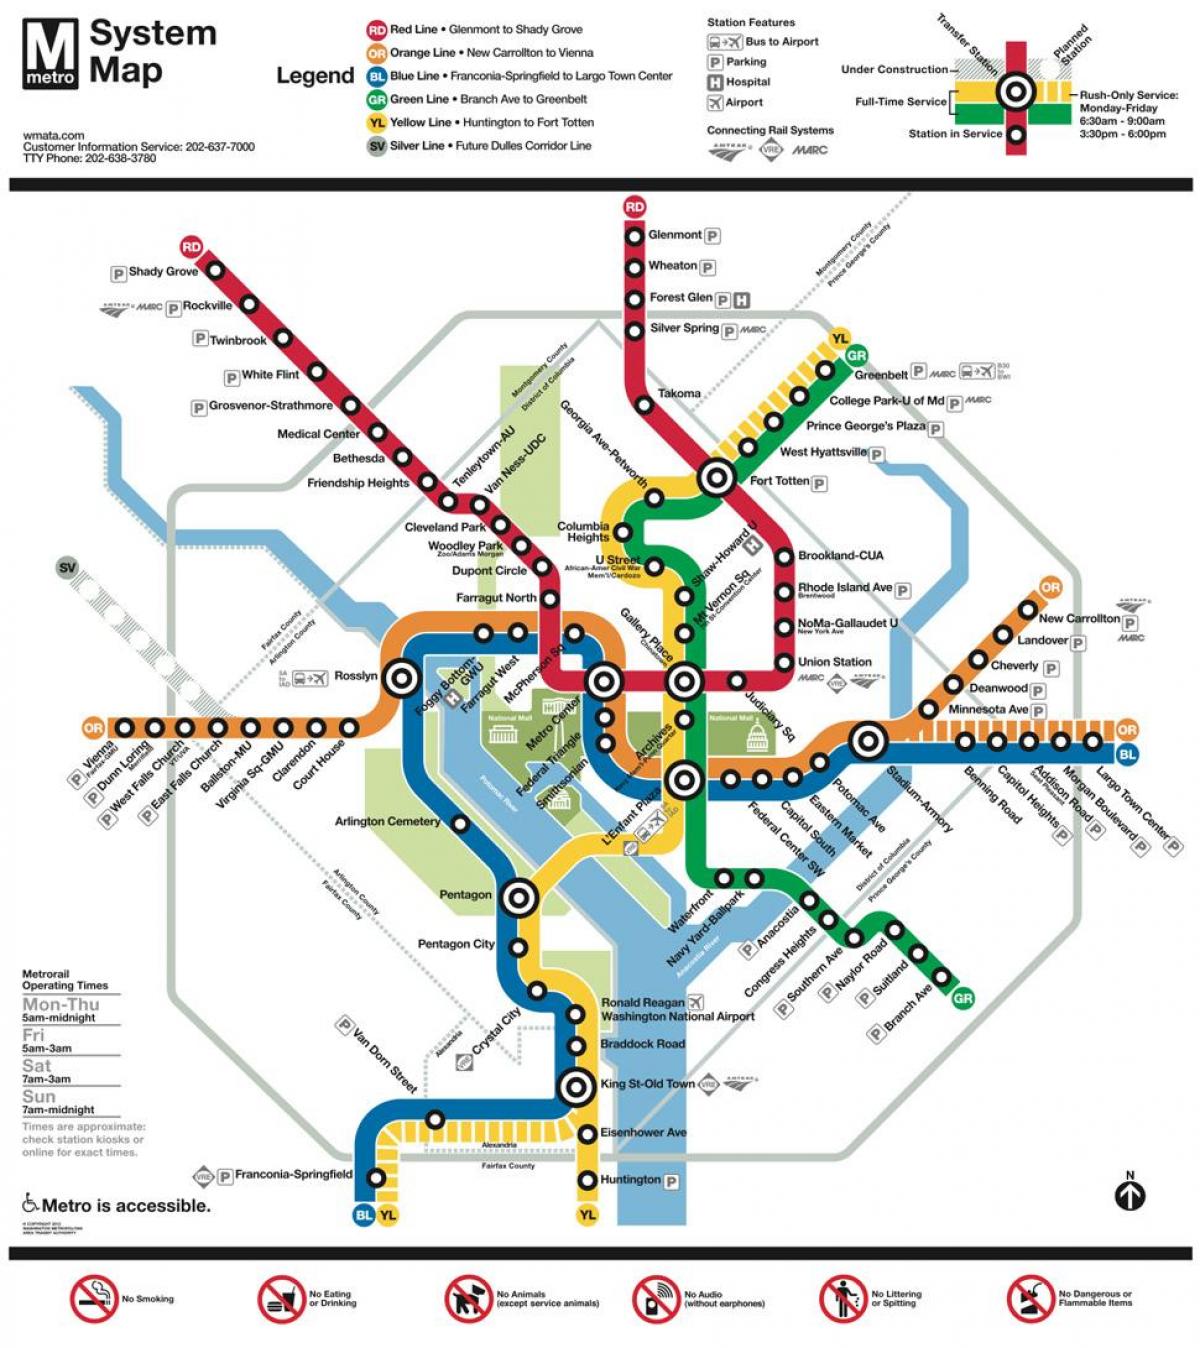 dca plan du métro